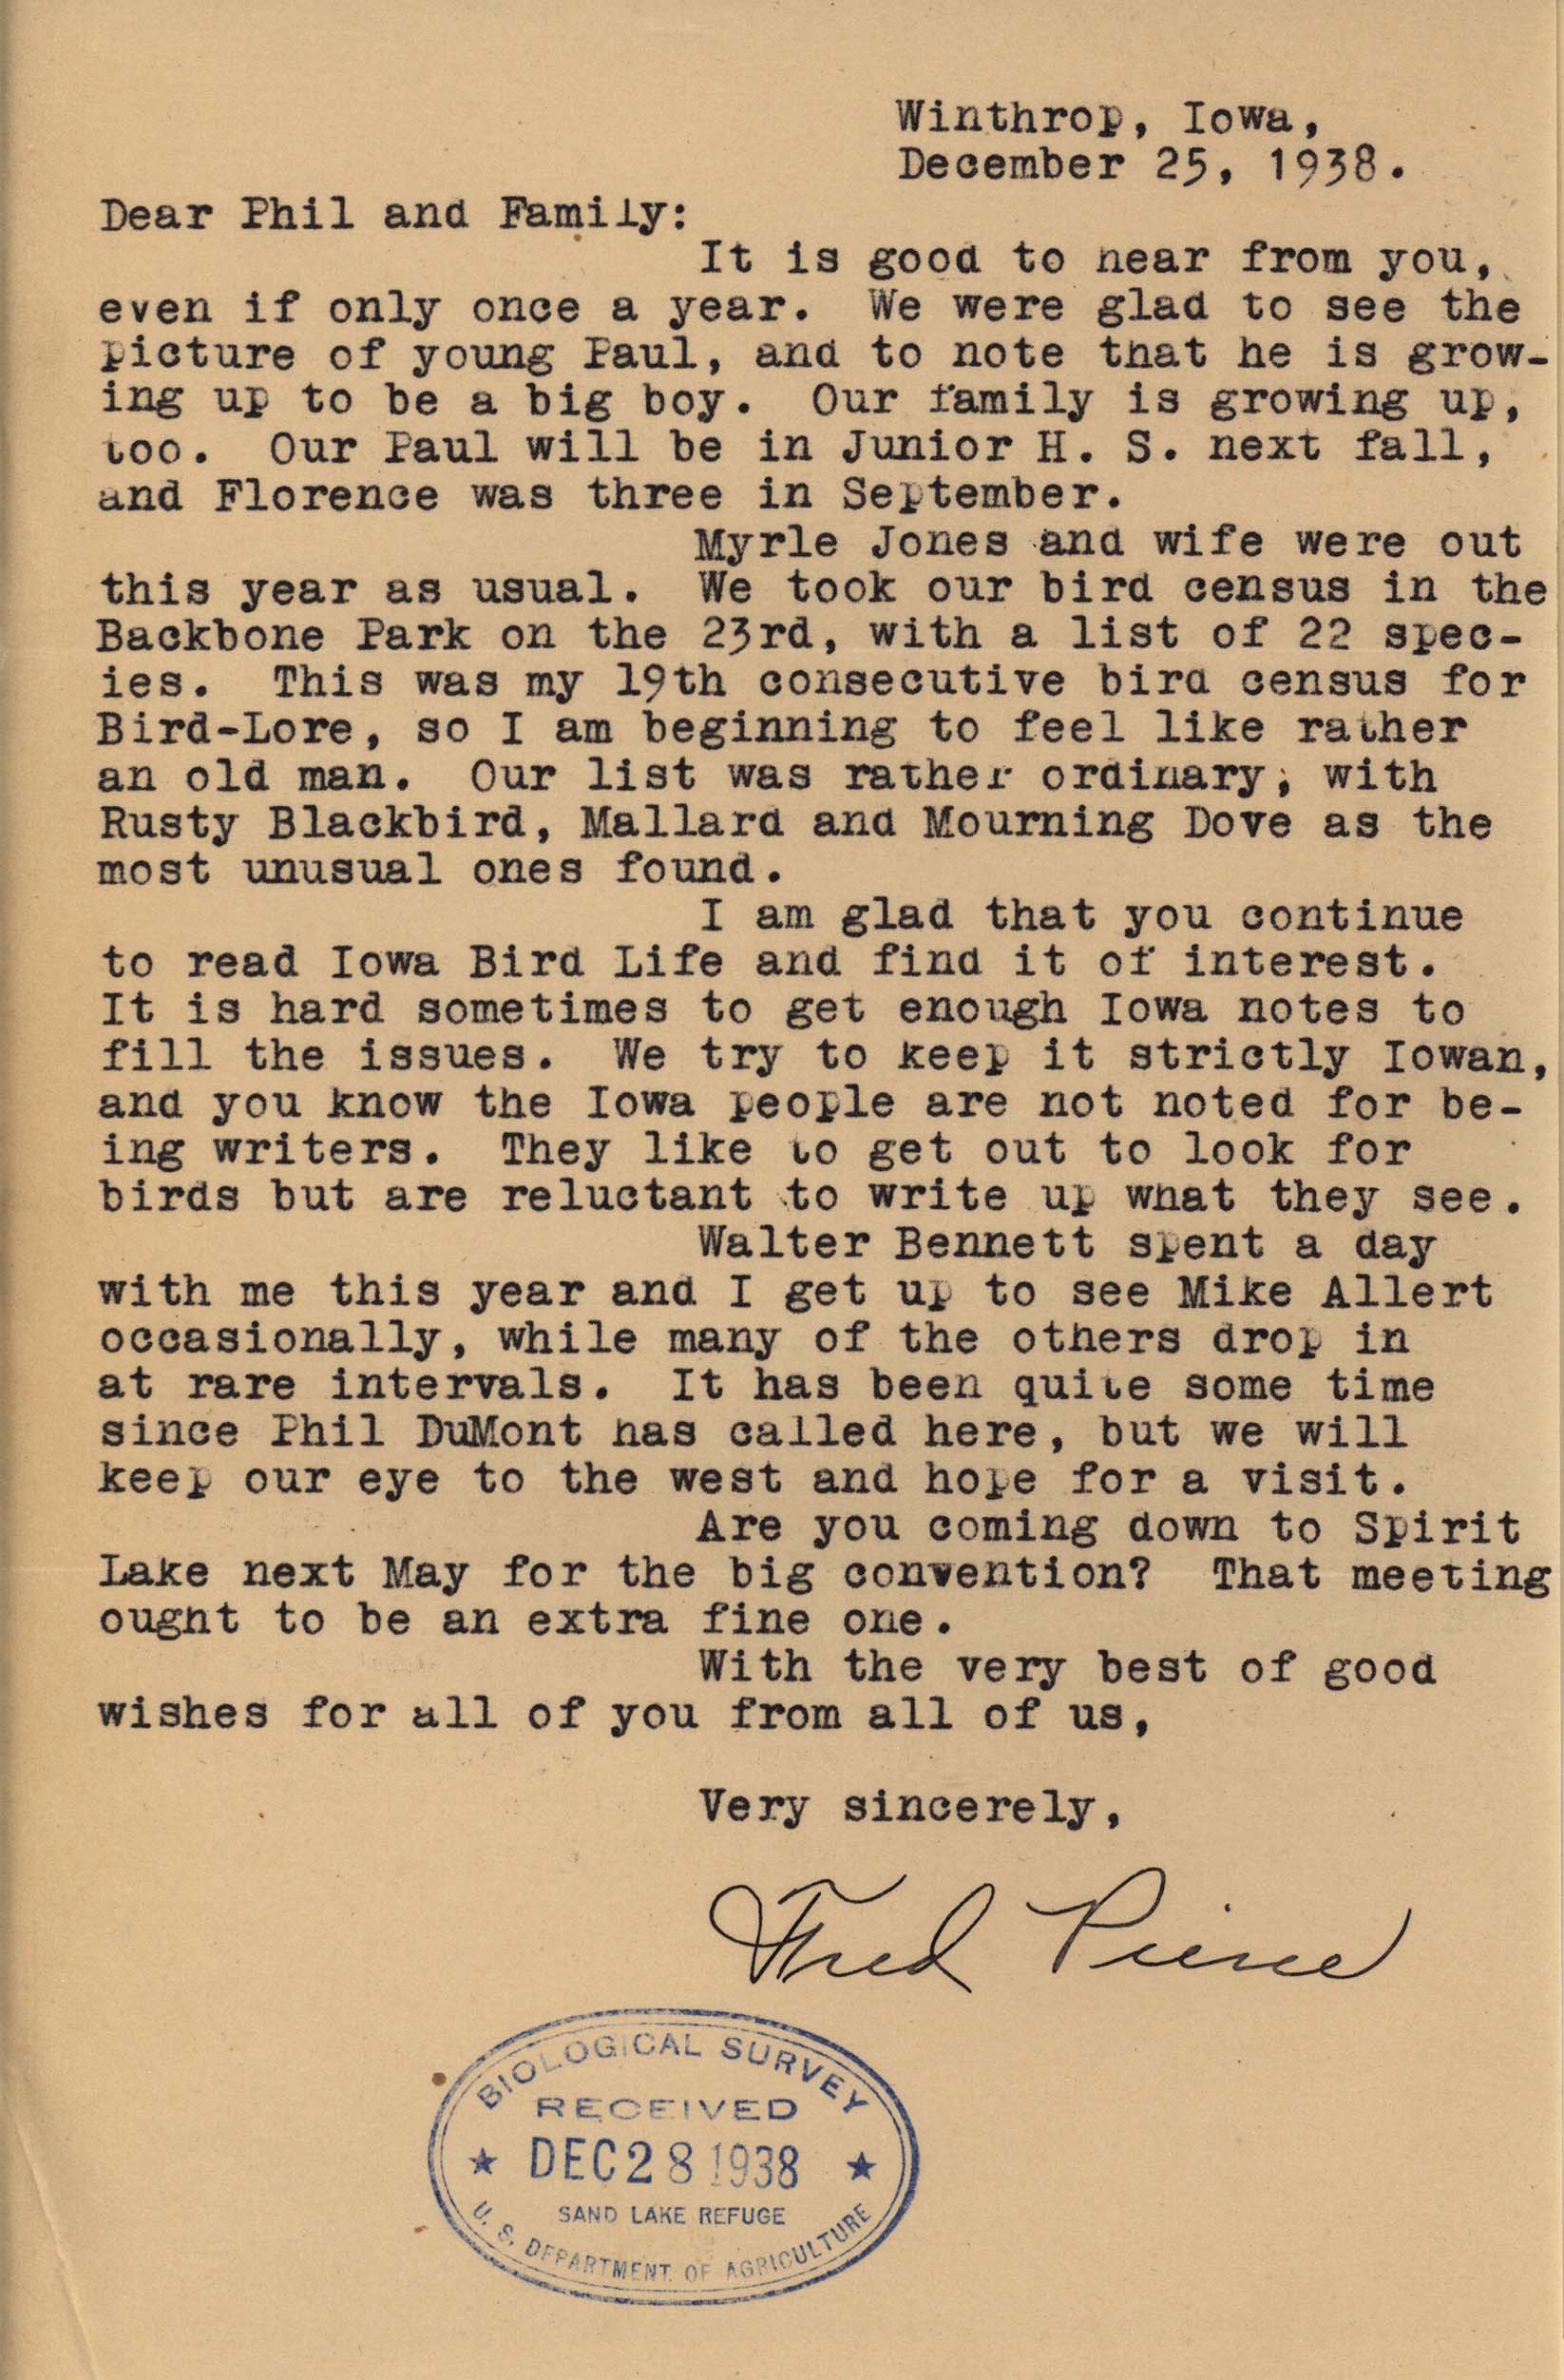 Fred Pierce letter to Philip DuMont regarding Christmas bird census, December 25, 1938